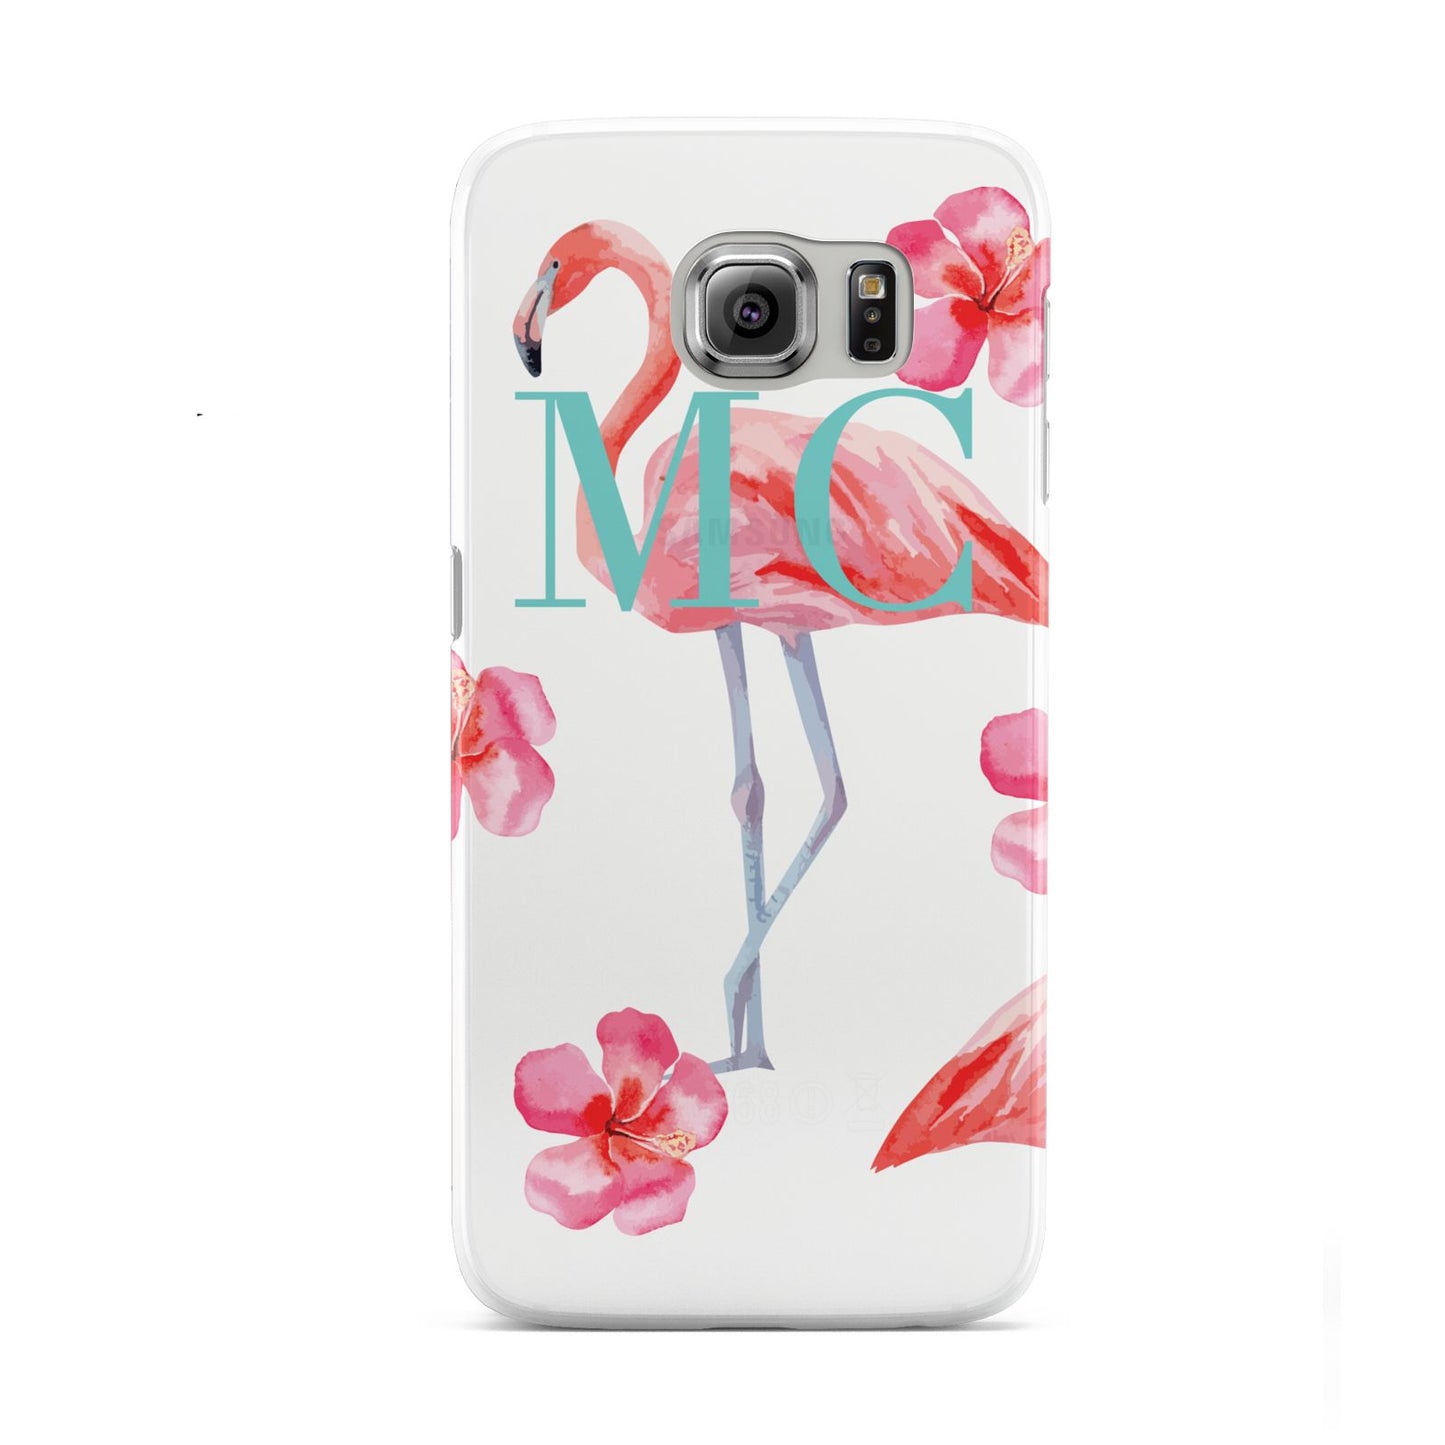 Personalised Initials Flamingo 3 Samsung Galaxy S6 Case